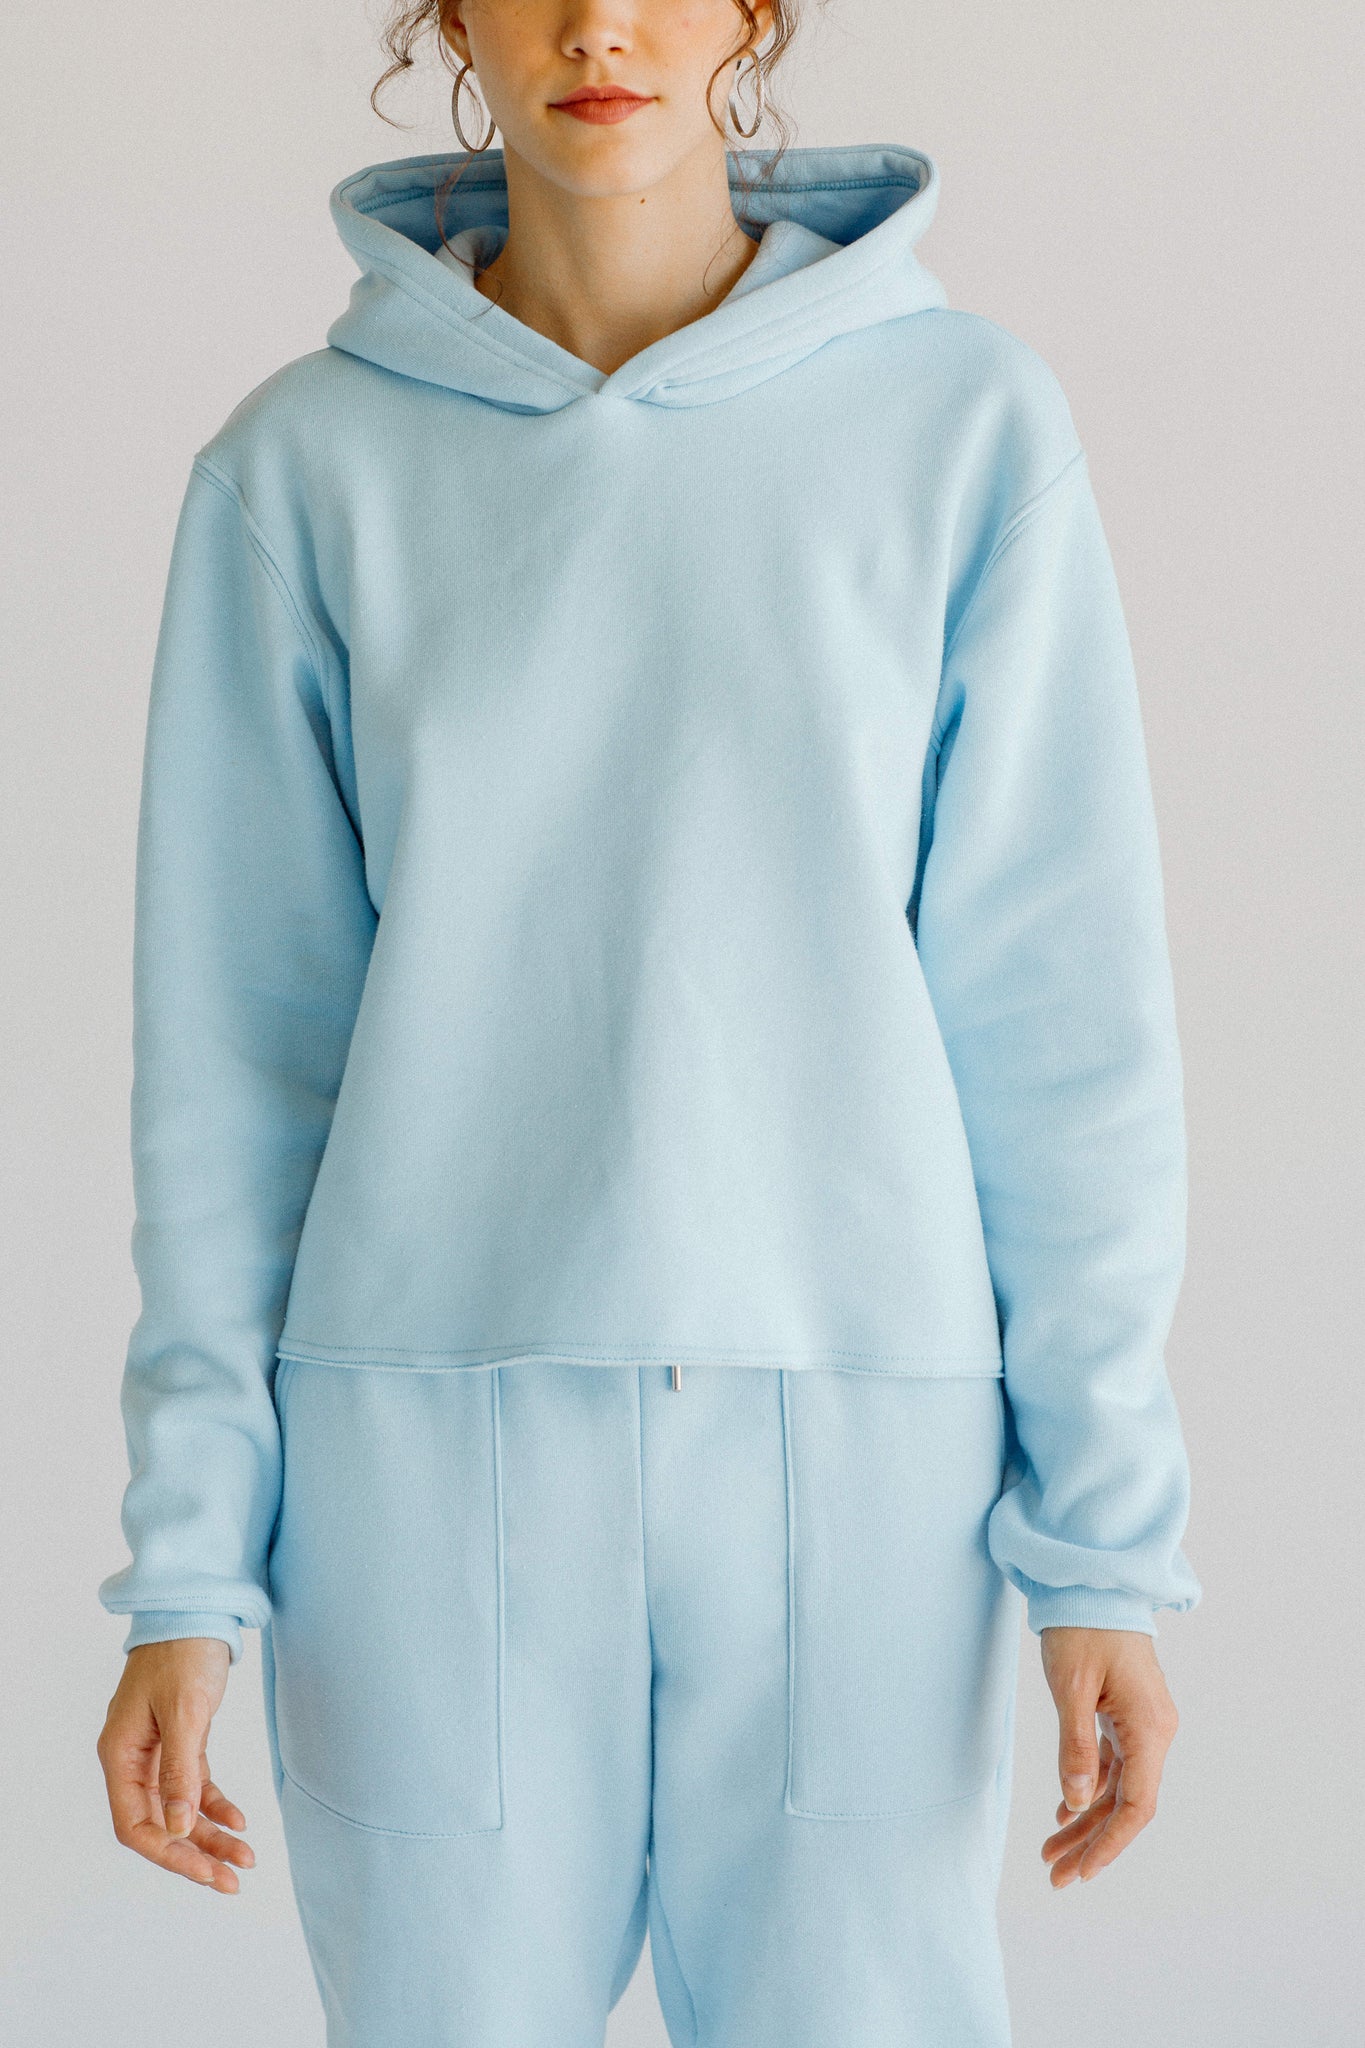 Tri-Blend Fleece Hooded Pullover Sweatshirt with Sweatpants Set Sky Blue